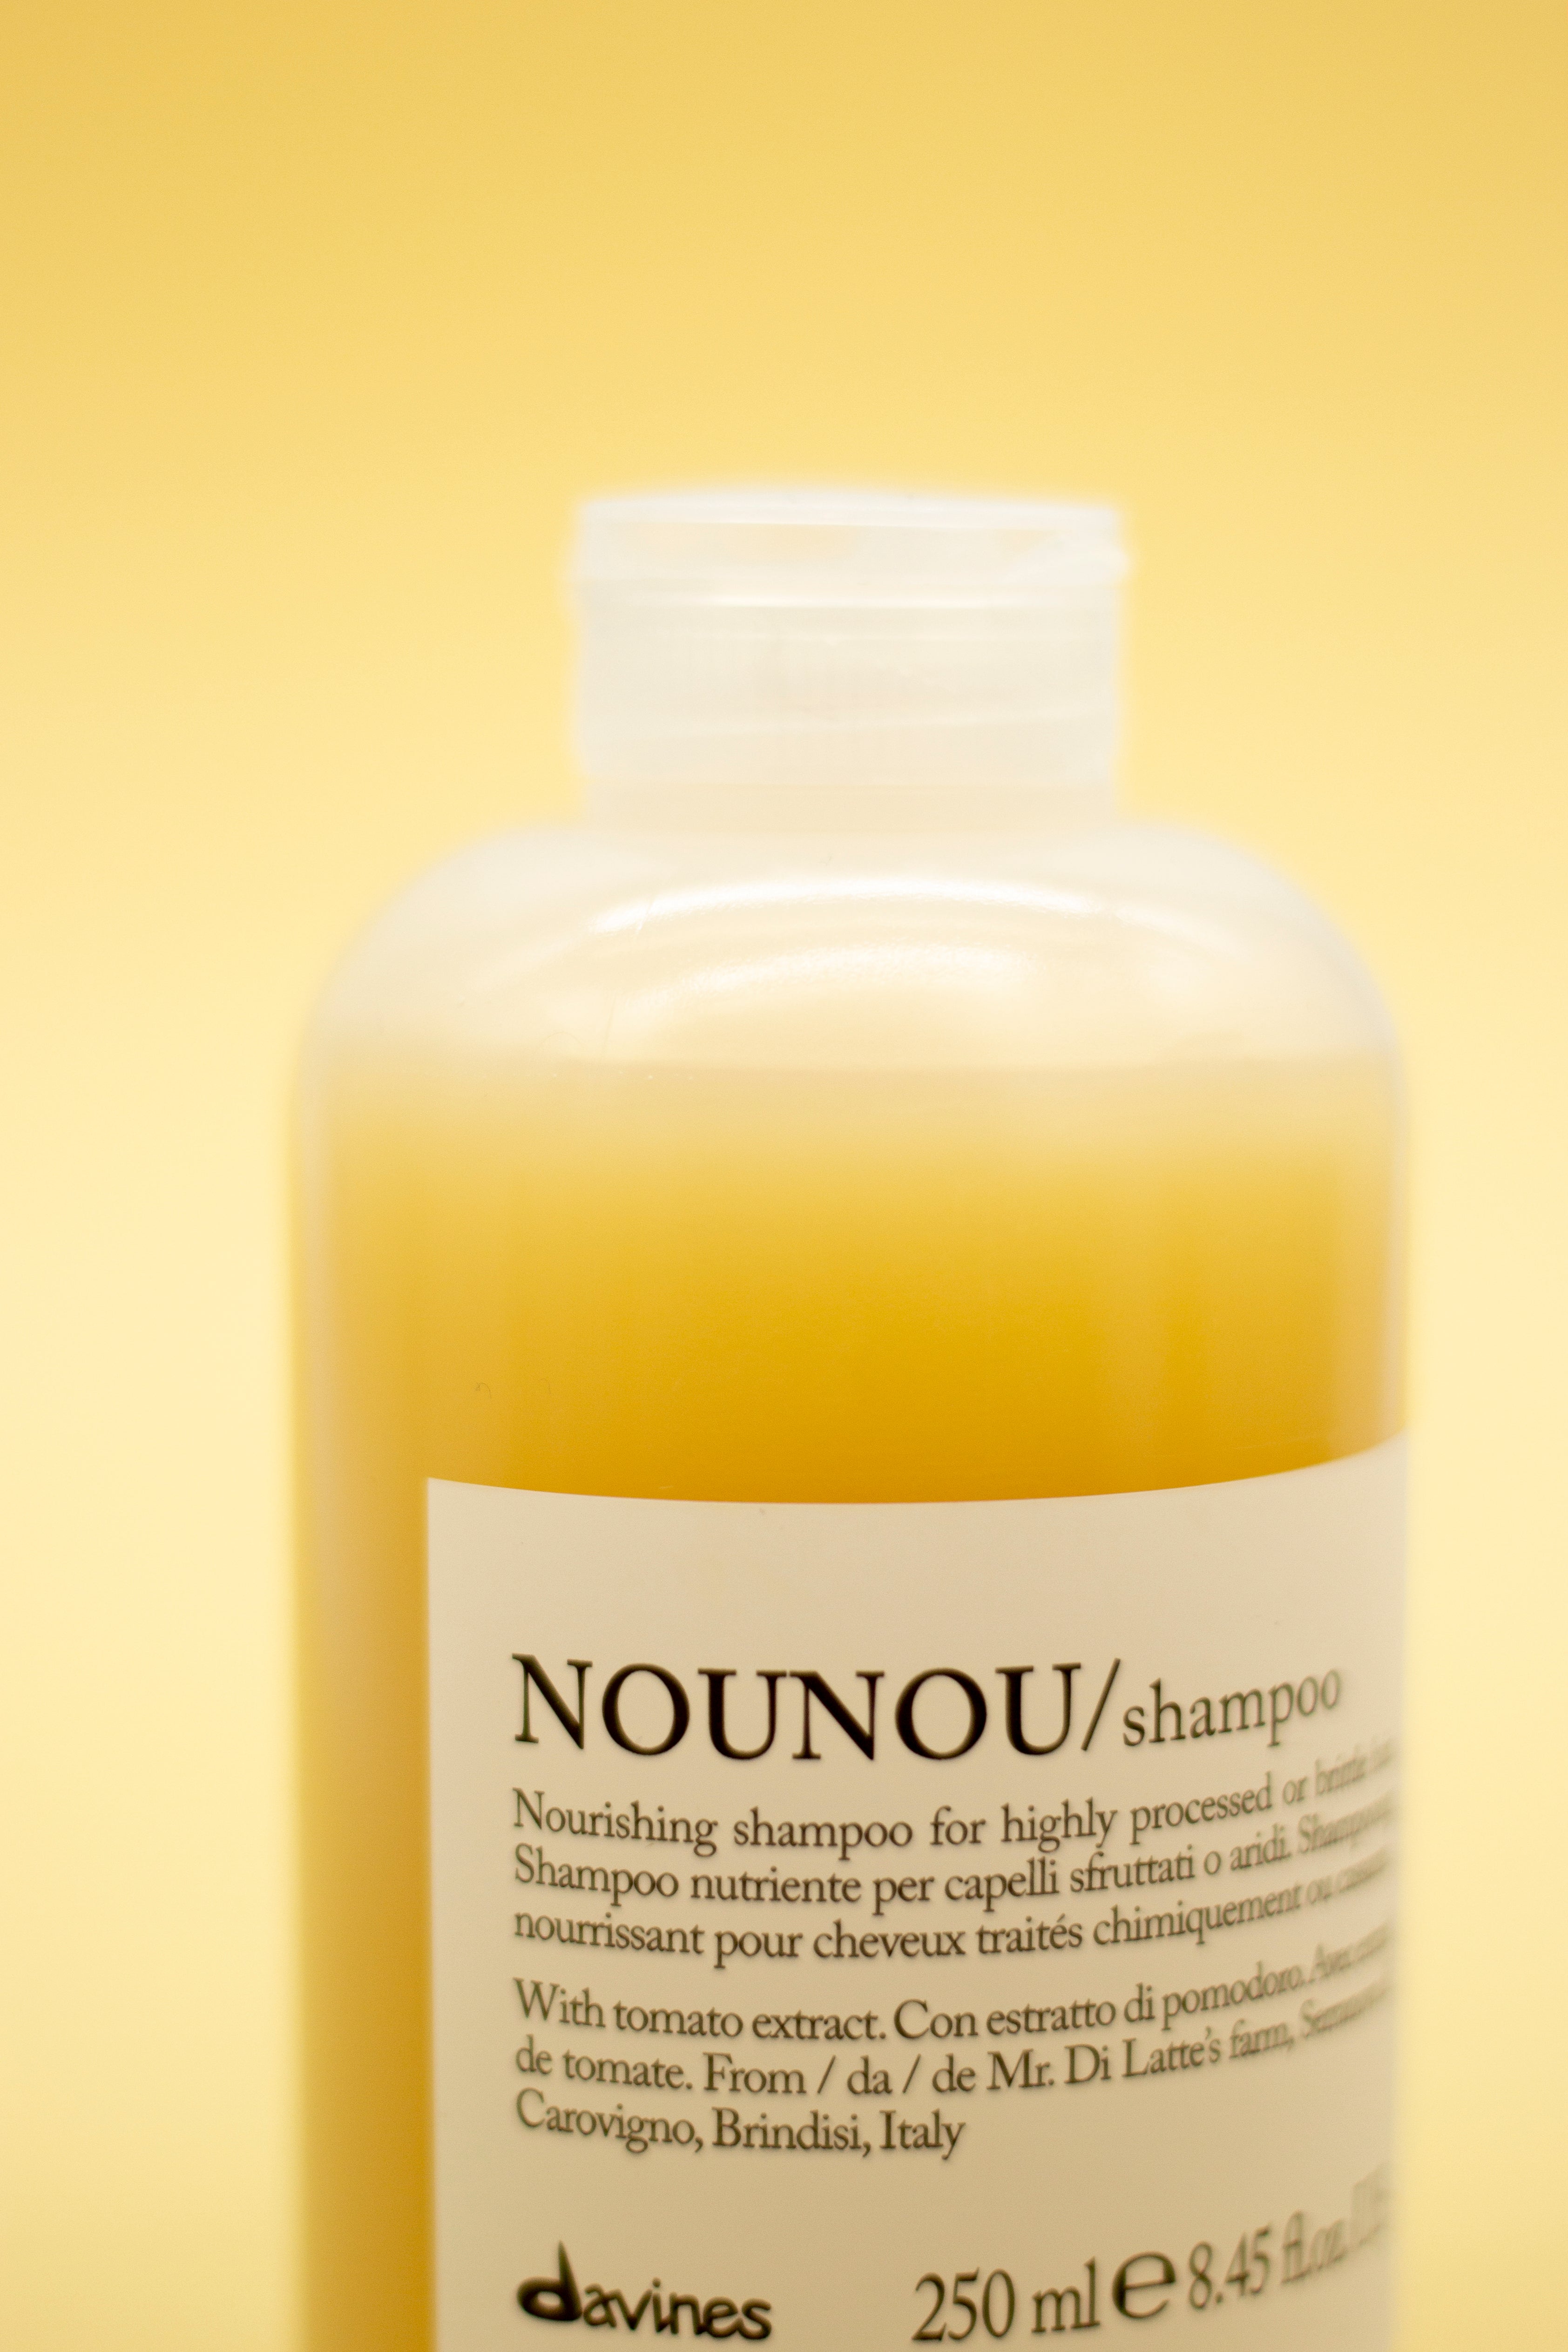 NOUNOU/ Shampoo